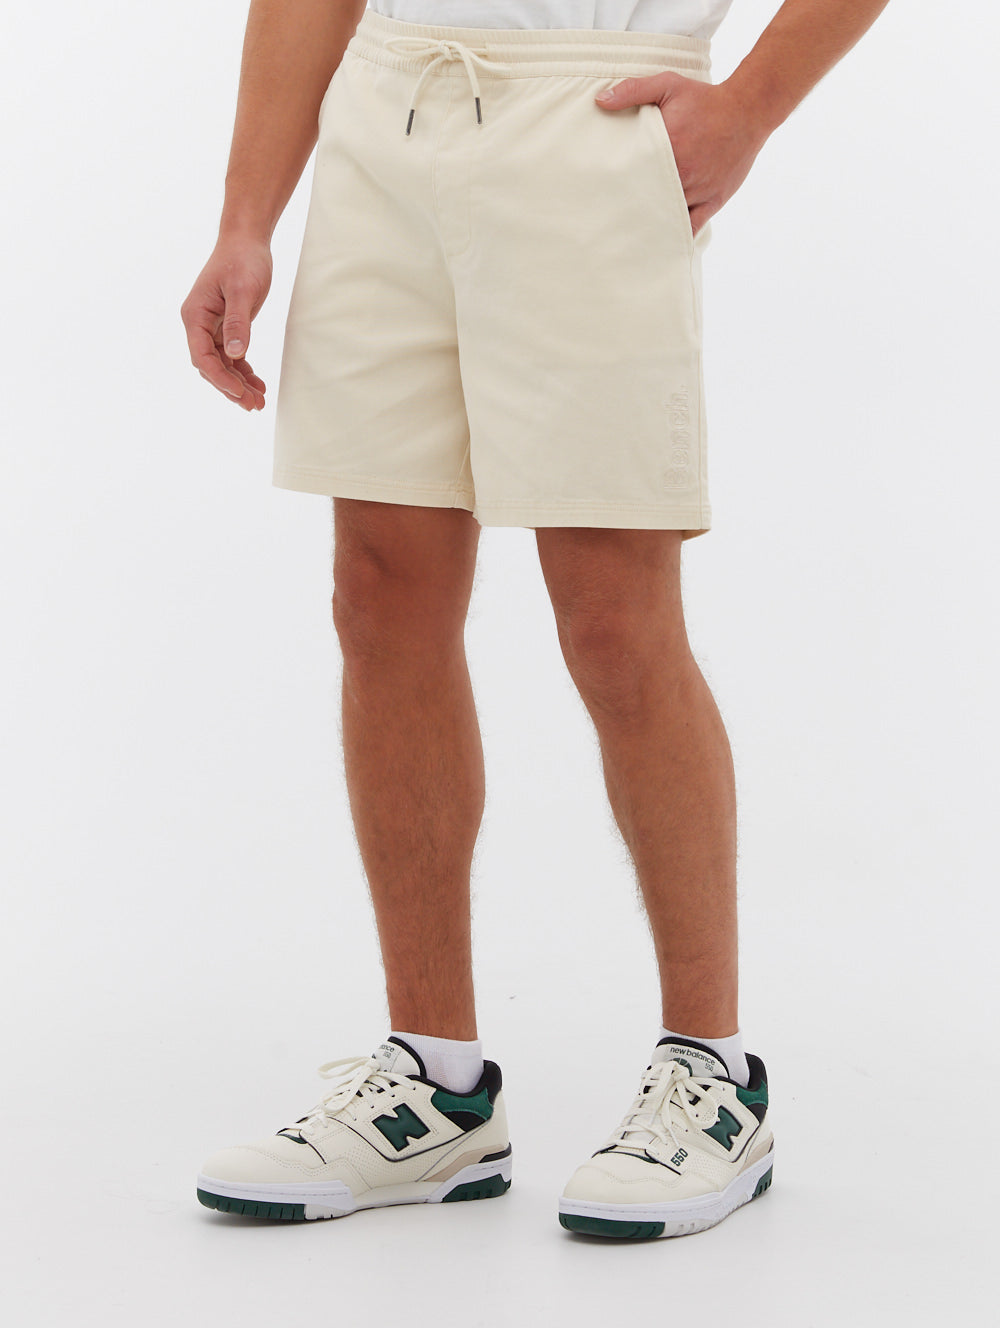 Winser Woven 7” Shorts - BMLH41054